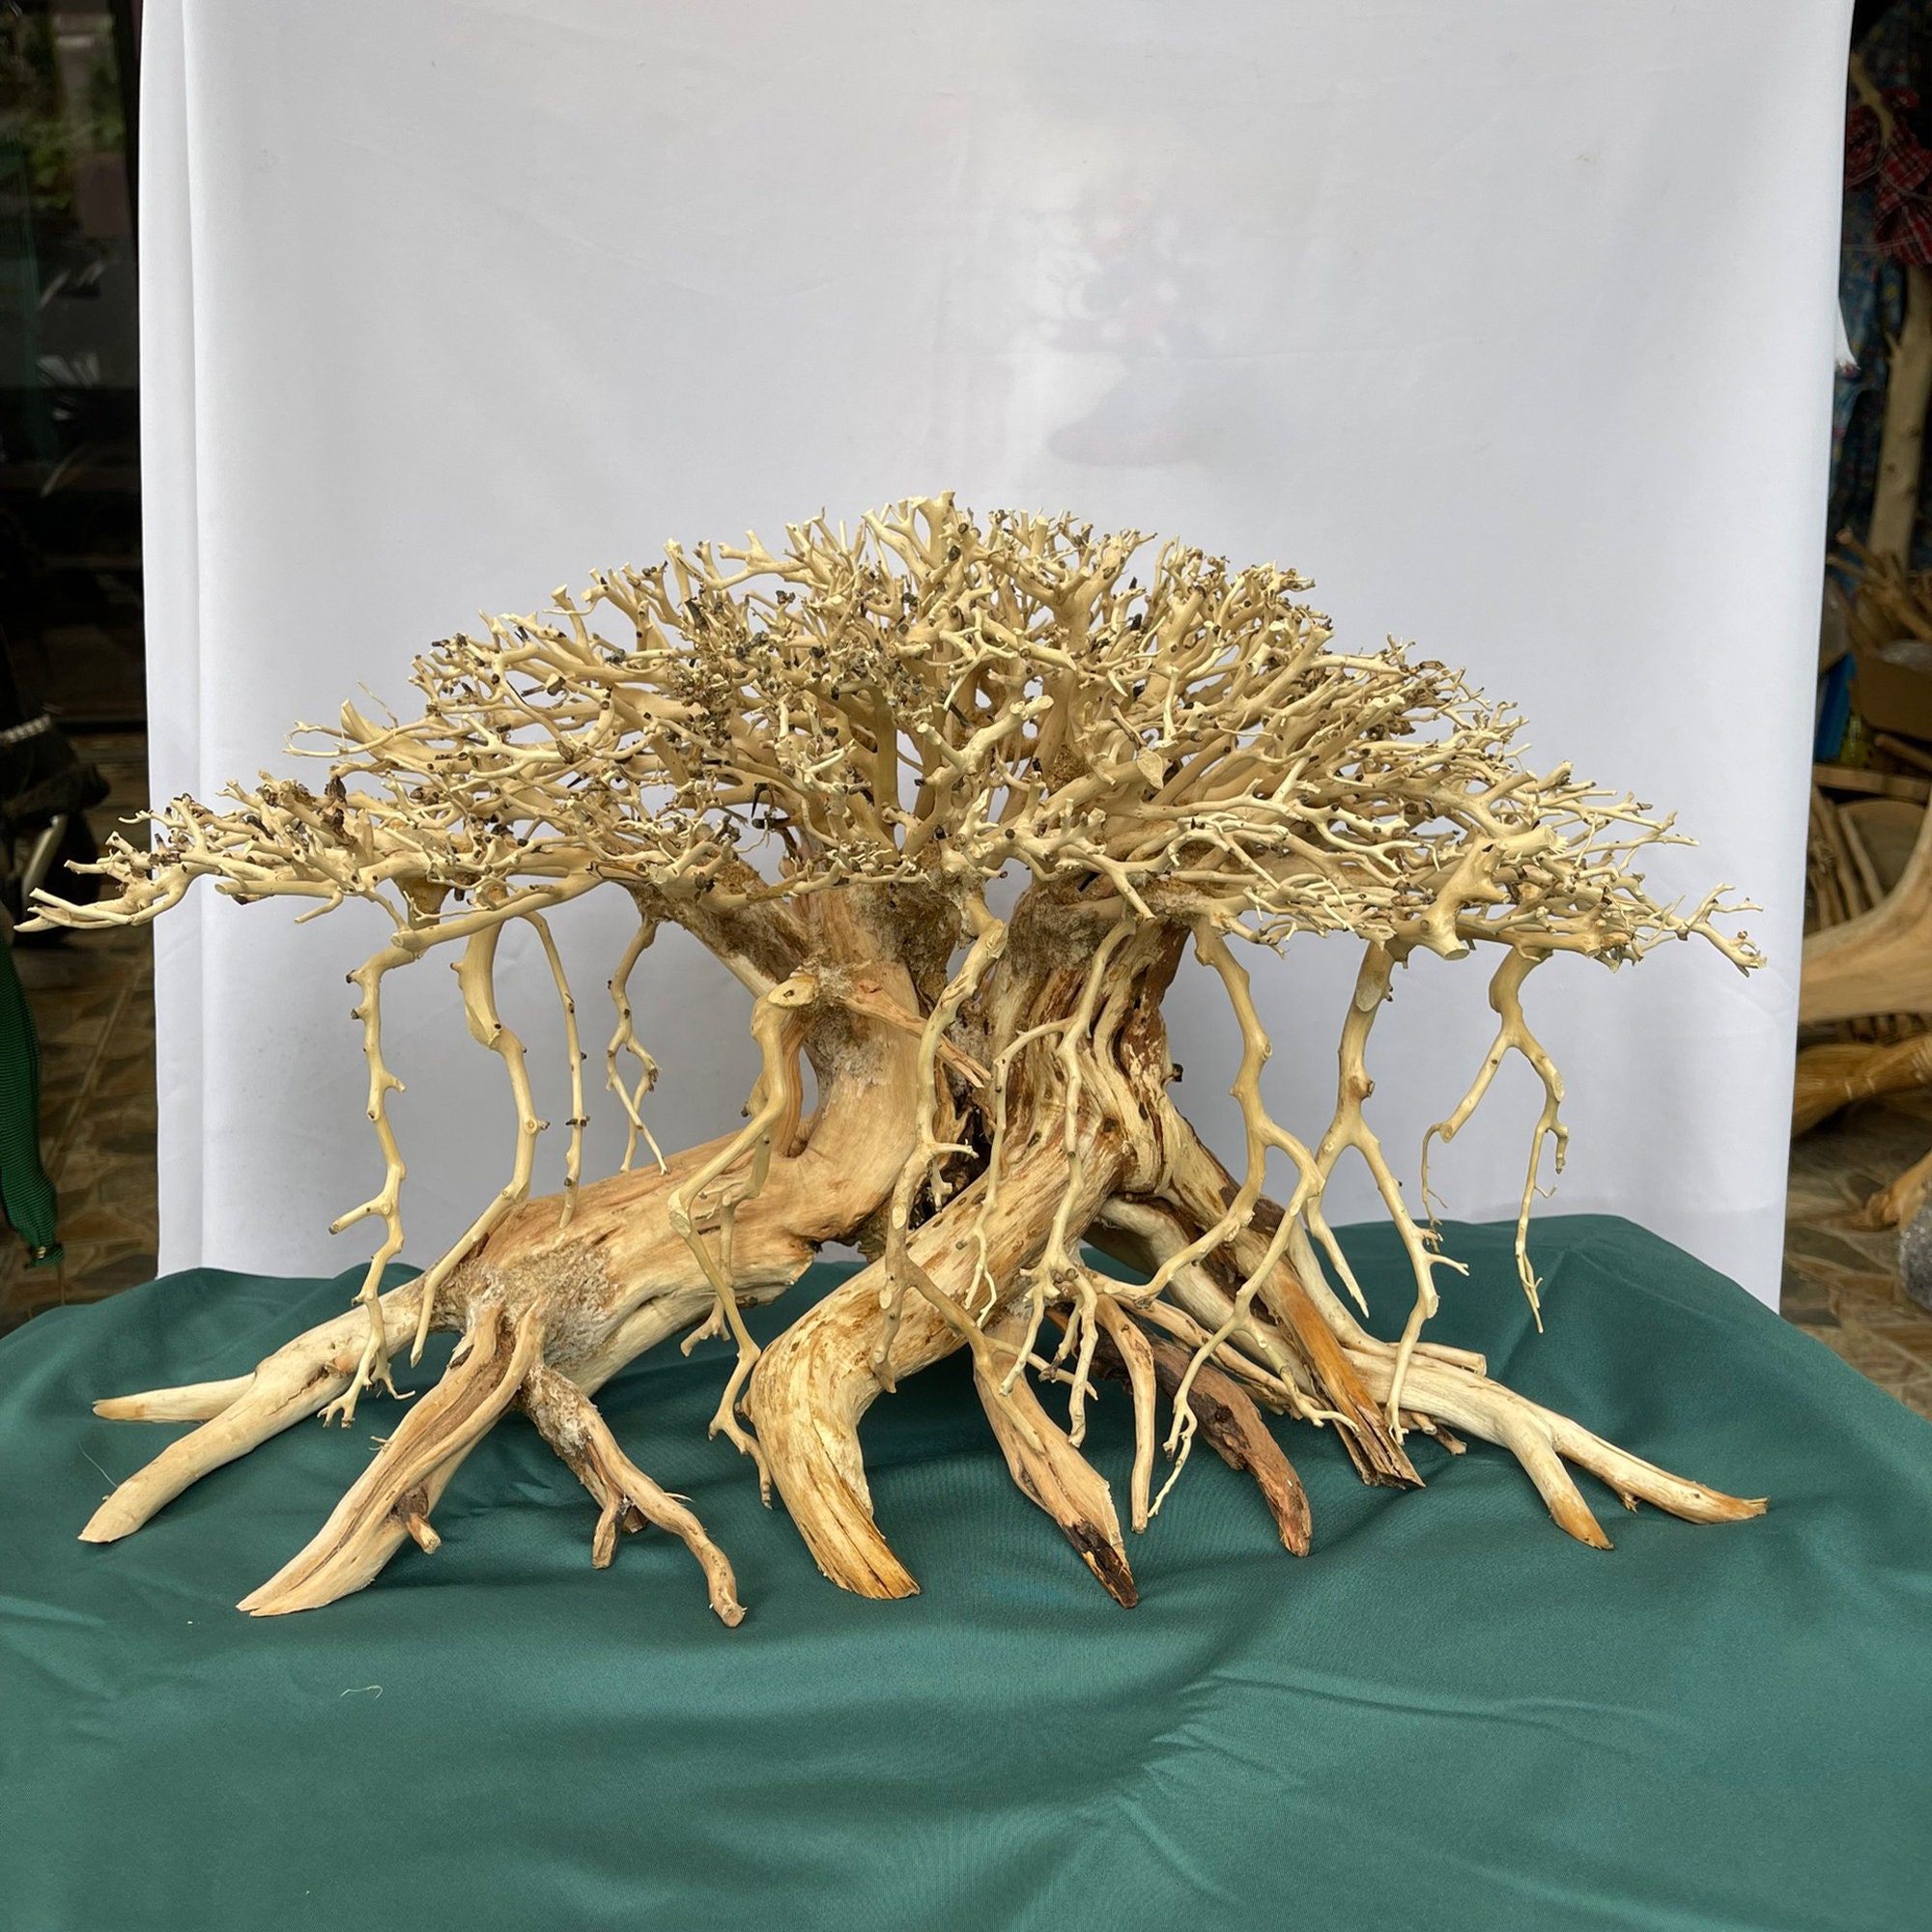 Log Driftwood for Reptiles Finn’s Forest Log Manzanita Driftwood for Aquarium Decorations 